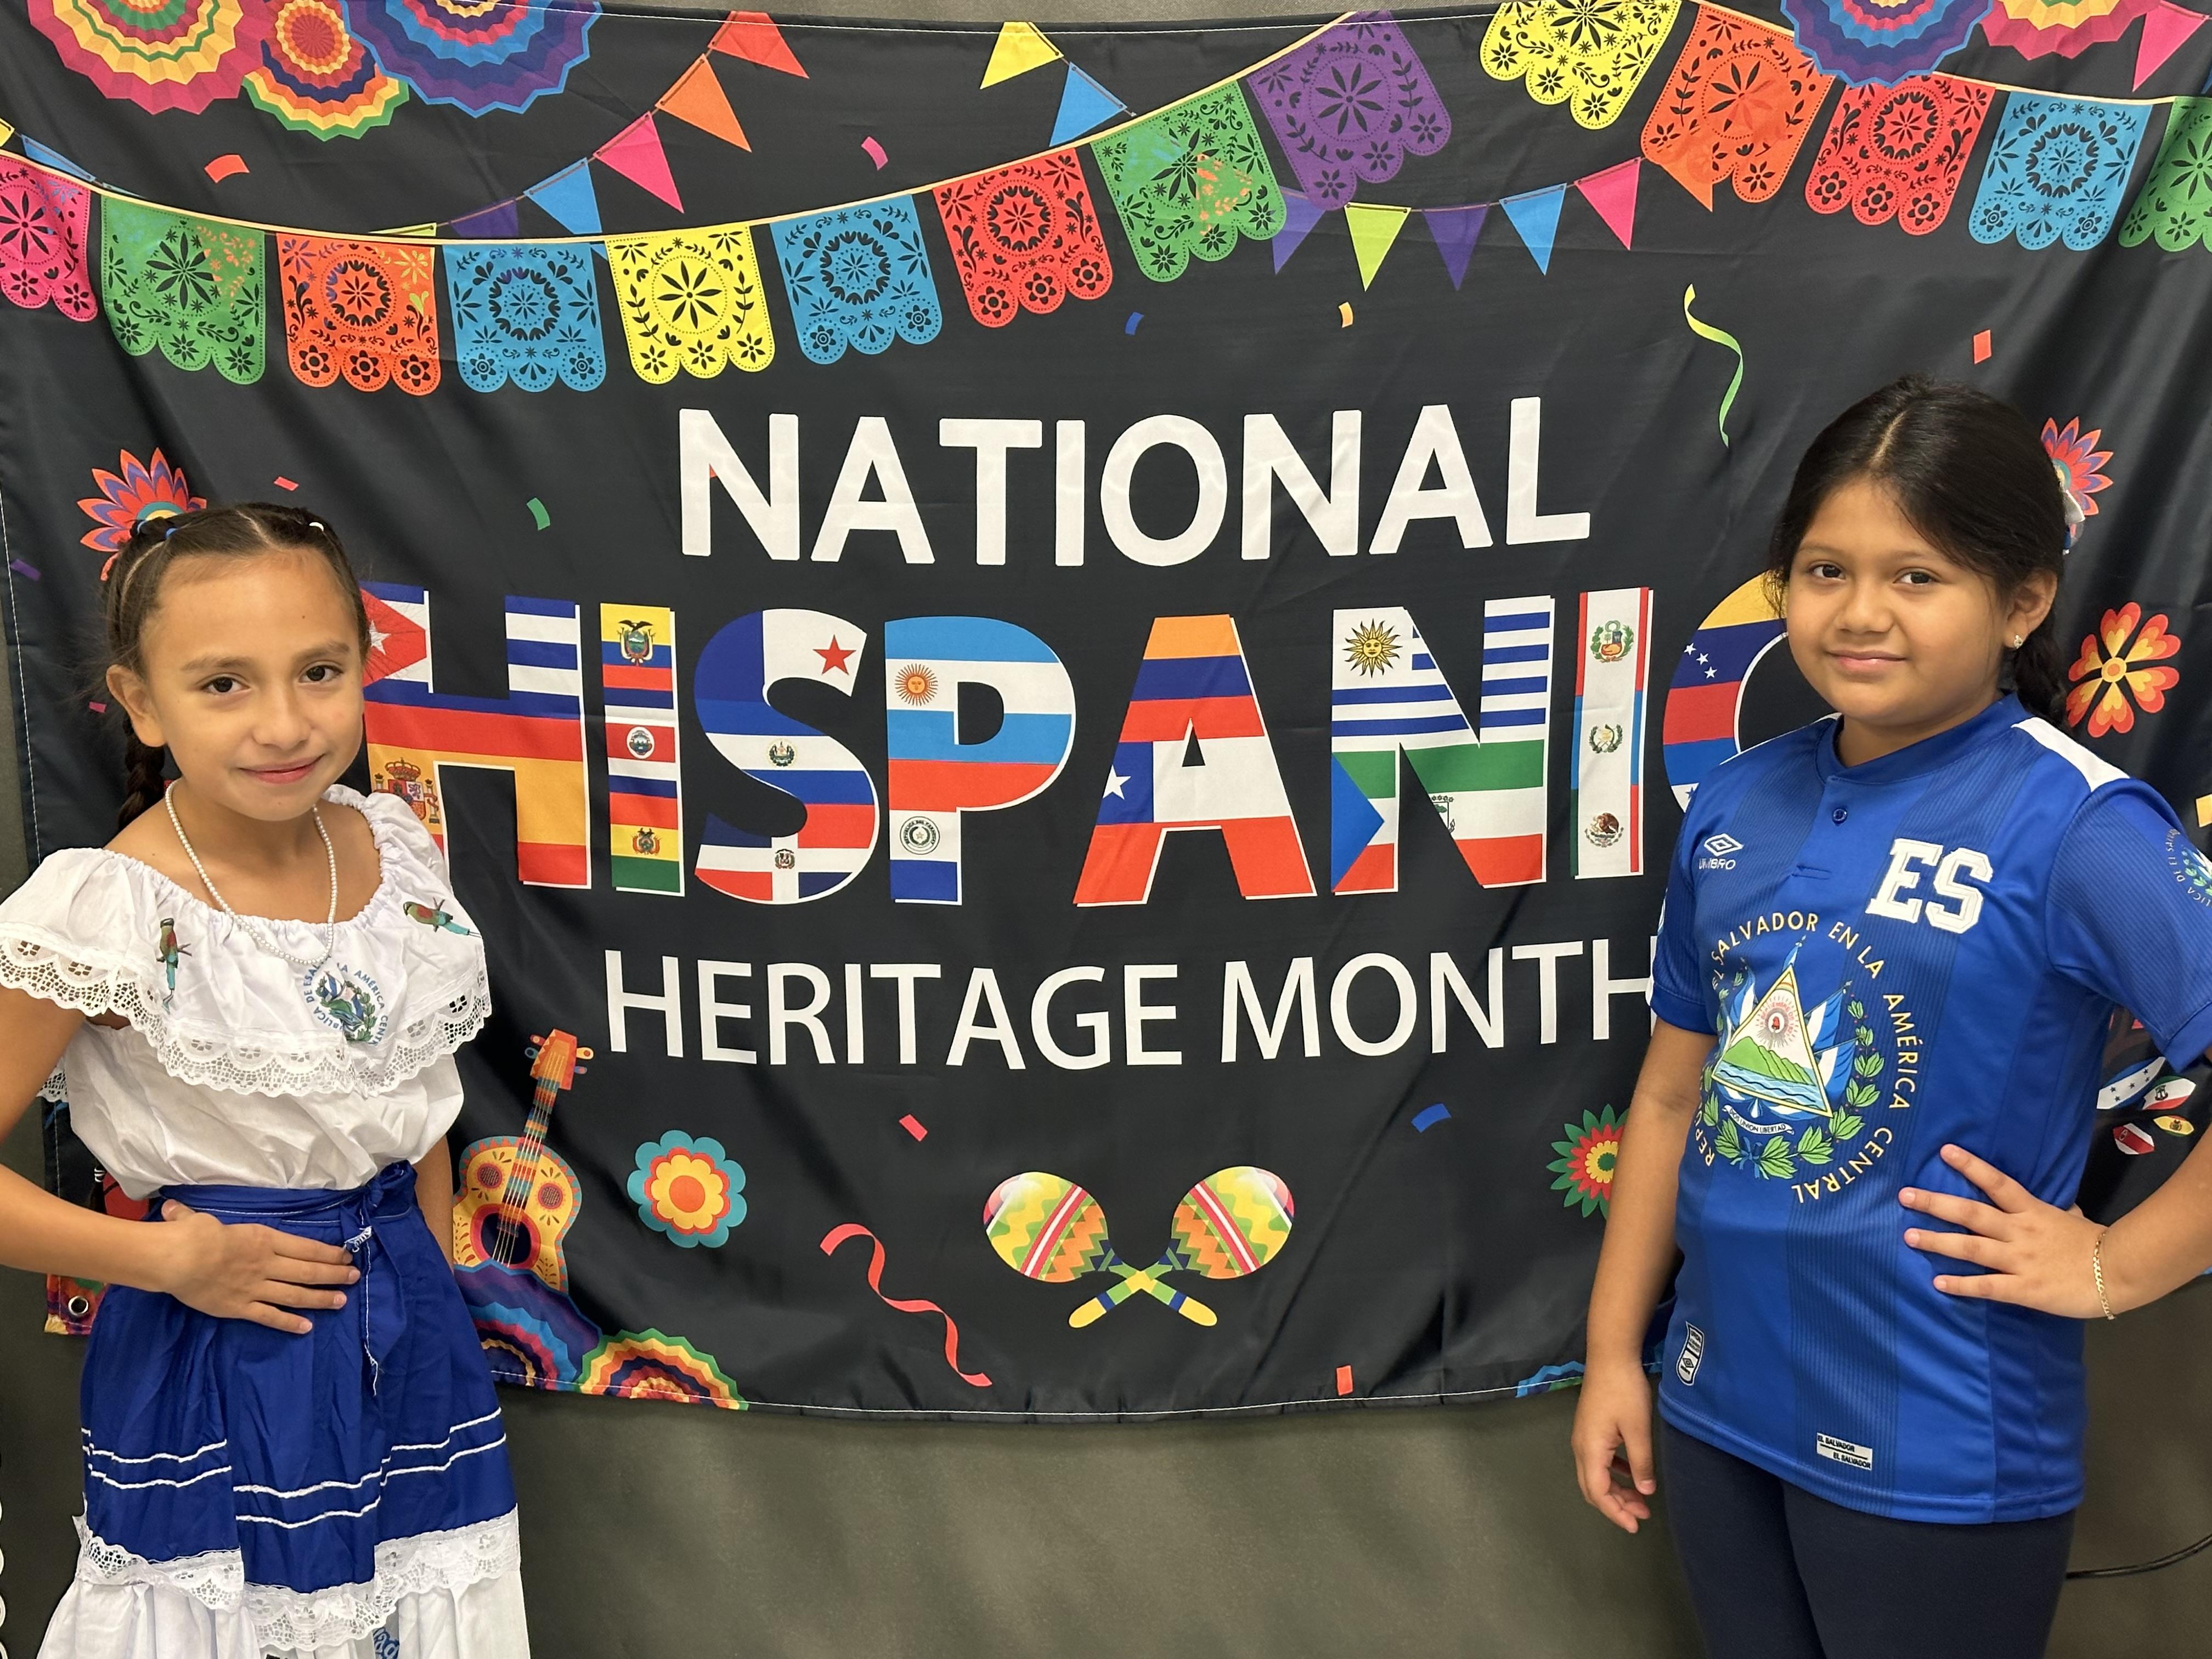 Celebrating Hispanic Heritage Month at the Robert Waters School